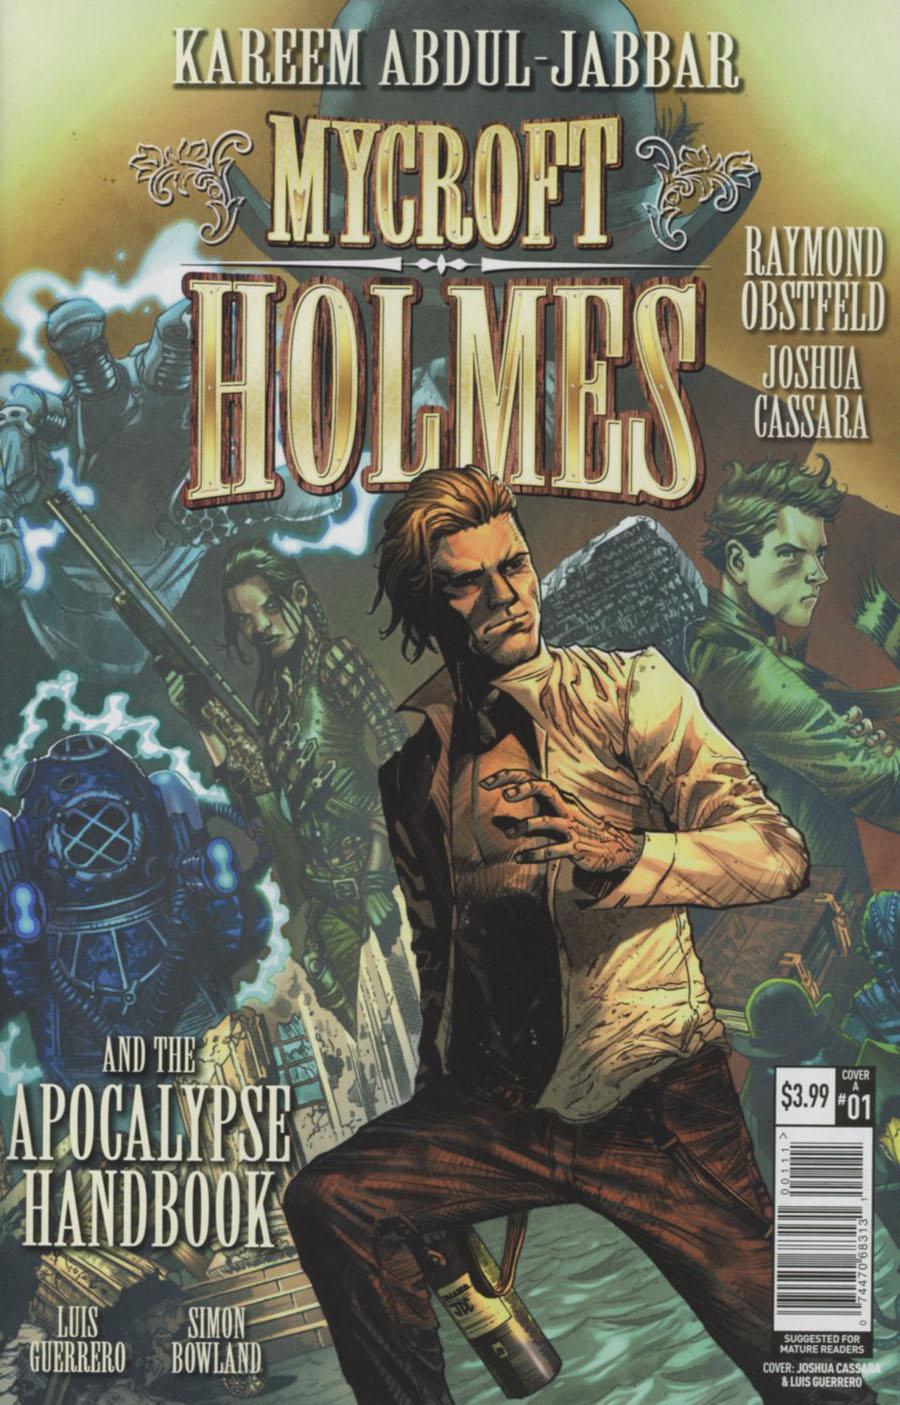 Mycroft Holmes And The Apocalypse Handbook Vol. 1 #1